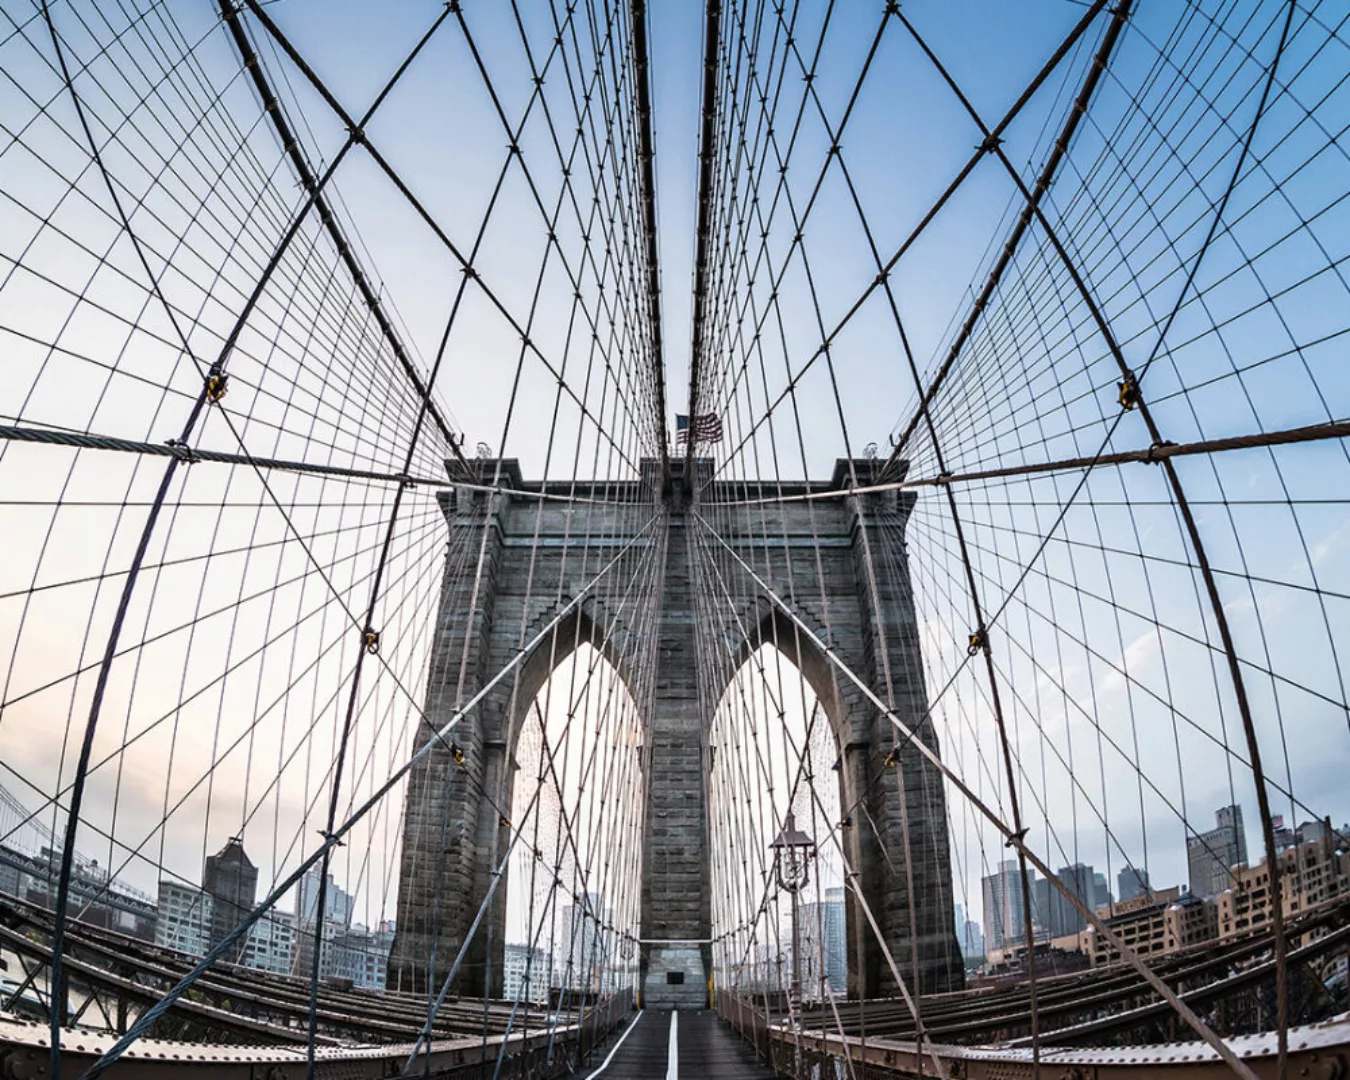 Fototapete "Brooklyn Bridge" 4,00x2,50 m / Strukturvlies Klassik günstig online kaufen